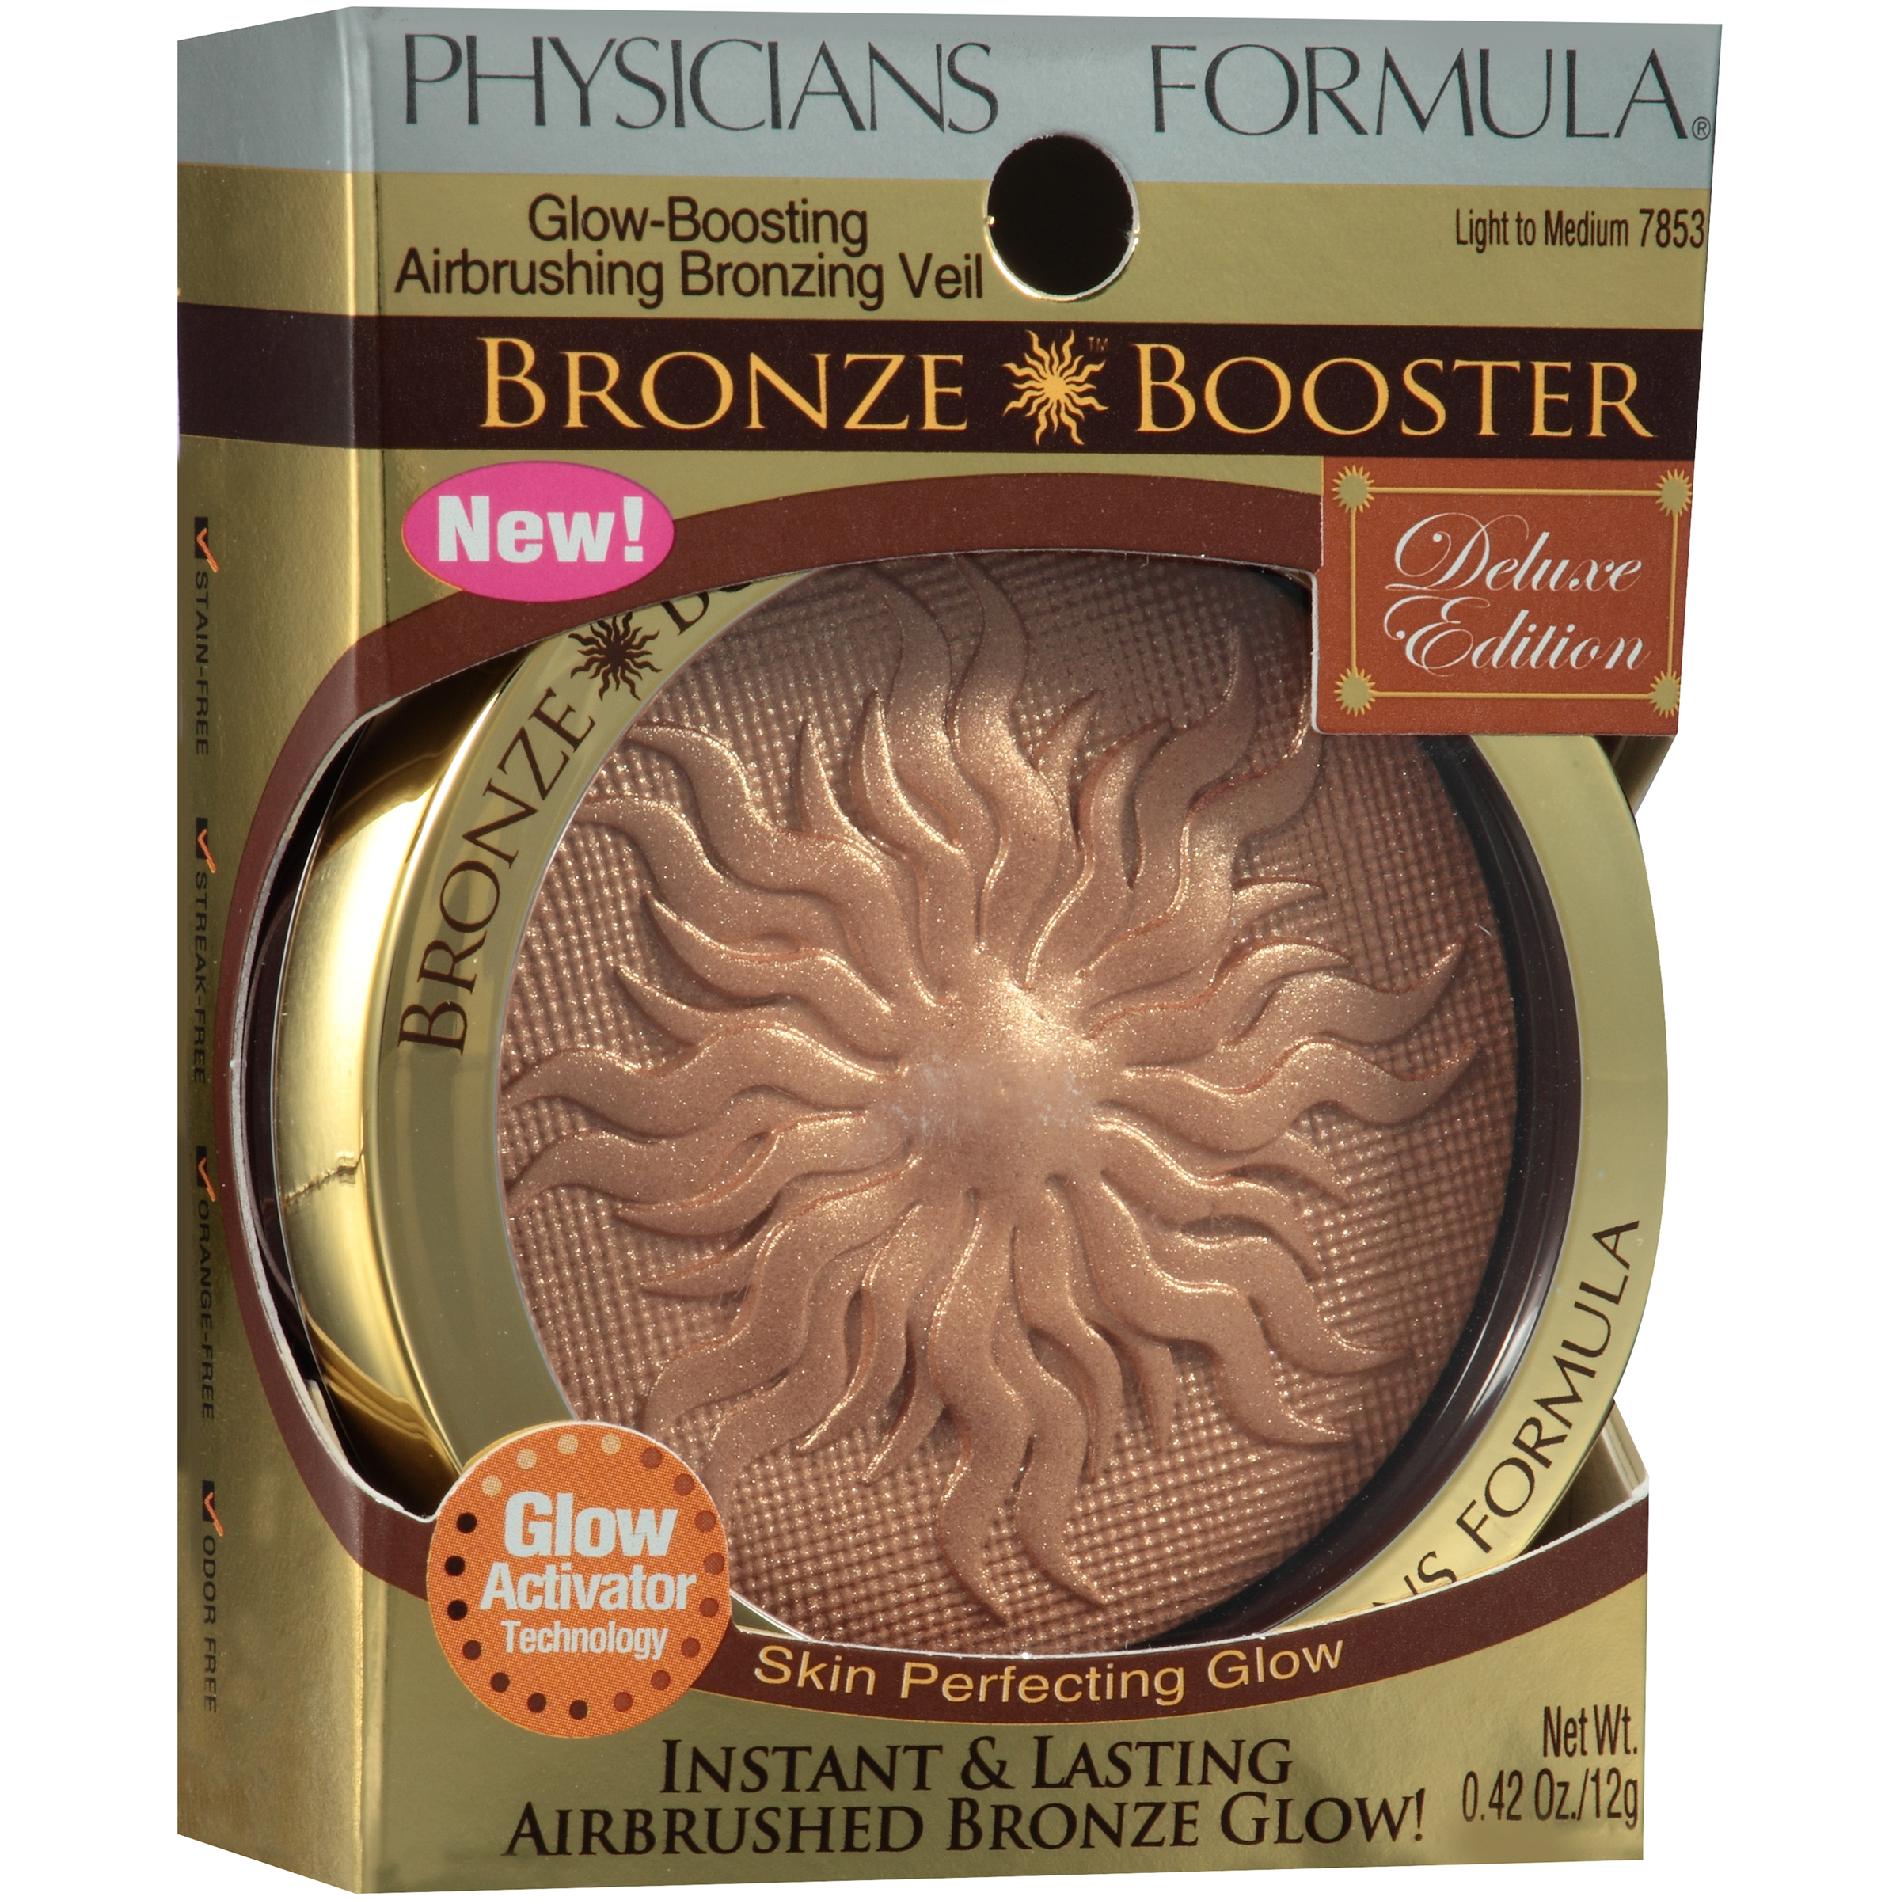 Physicians Formula Bronze Booster Glow-Boosting Airbrushing Bronzing Veil